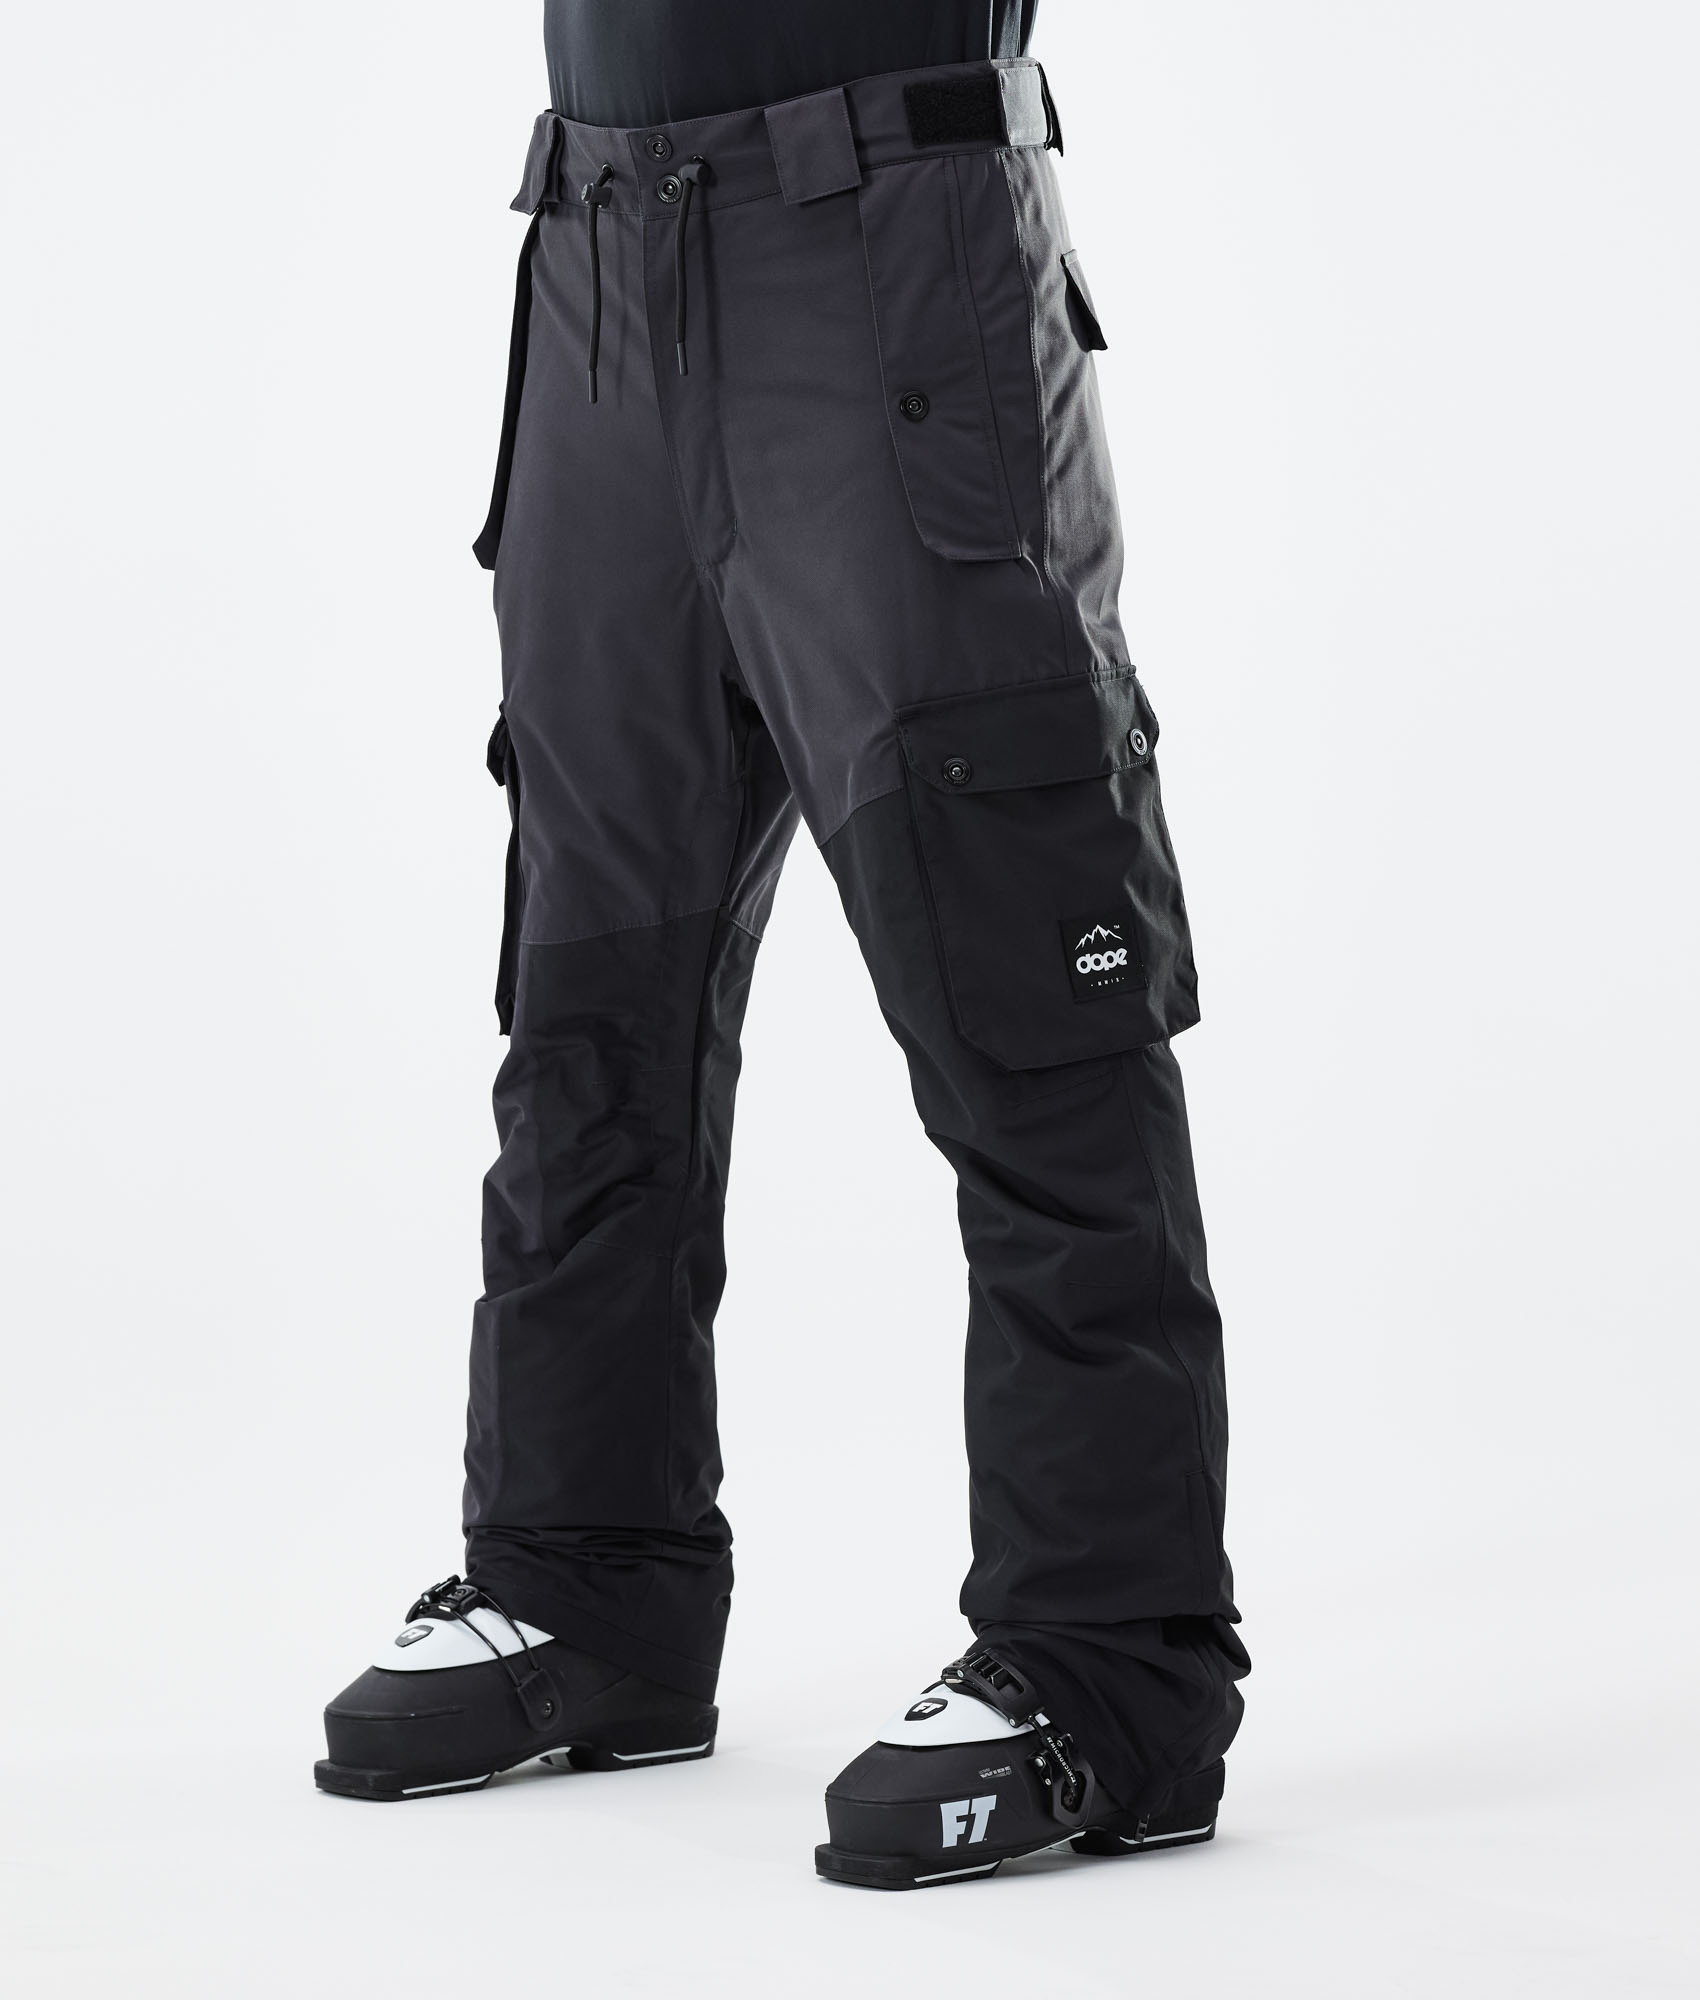 Oxbow Faria Pant Womens Ivory Snowboarding Ski Trousers Salopettes EU 40  UK 12  eBay